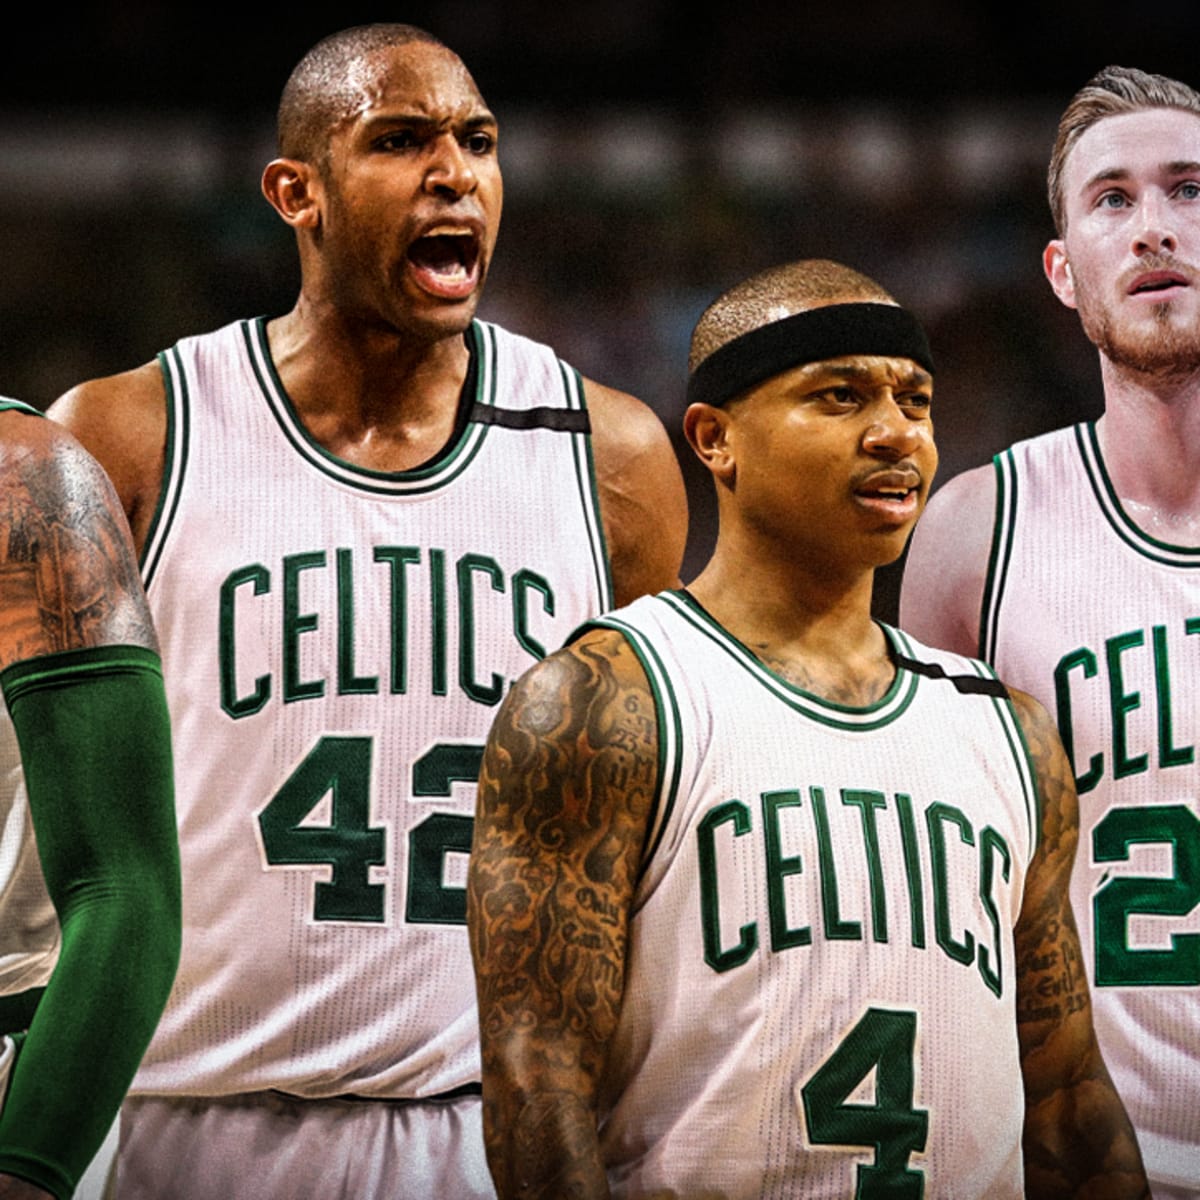 Merch Madness Round of 16: vote on your favorite Celtics jerseys